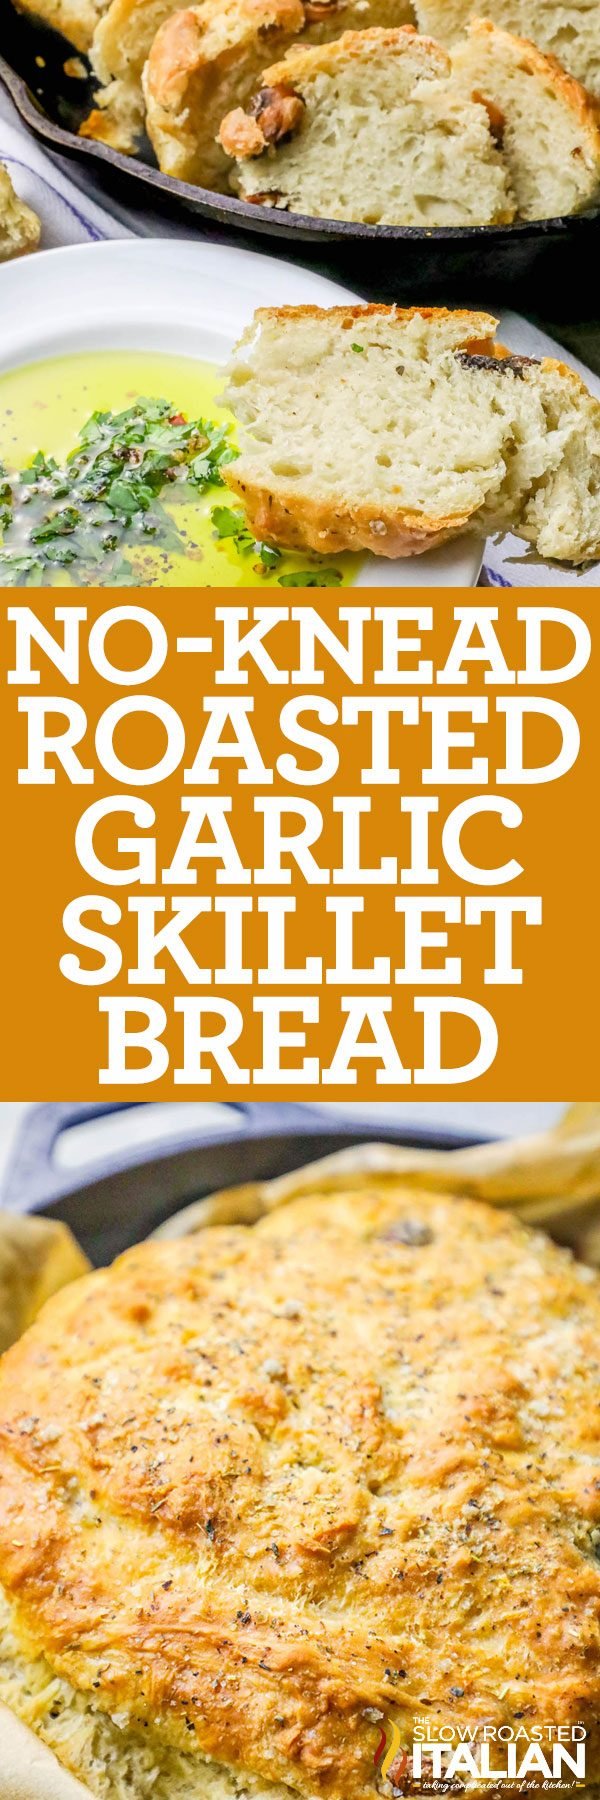 no-knead-roasted-garlic-skillet-bread-pin-6891590